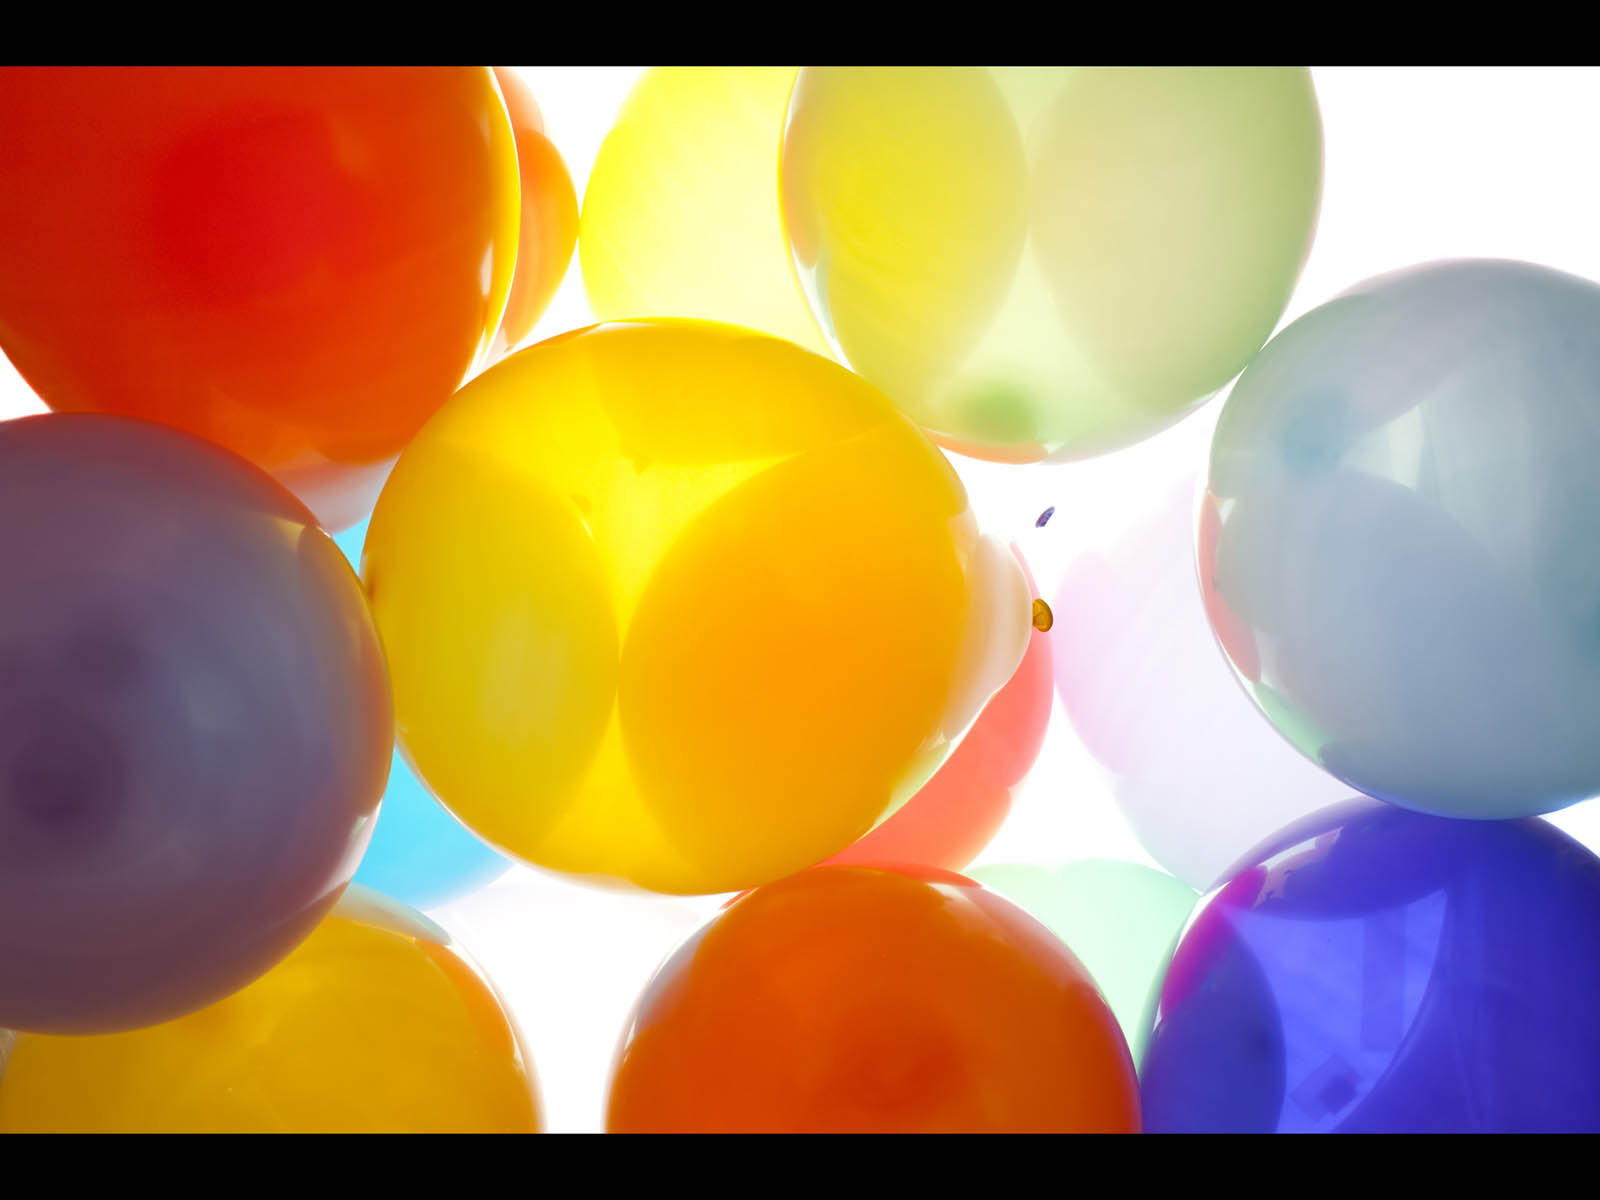 Daylight Balloons Presentation